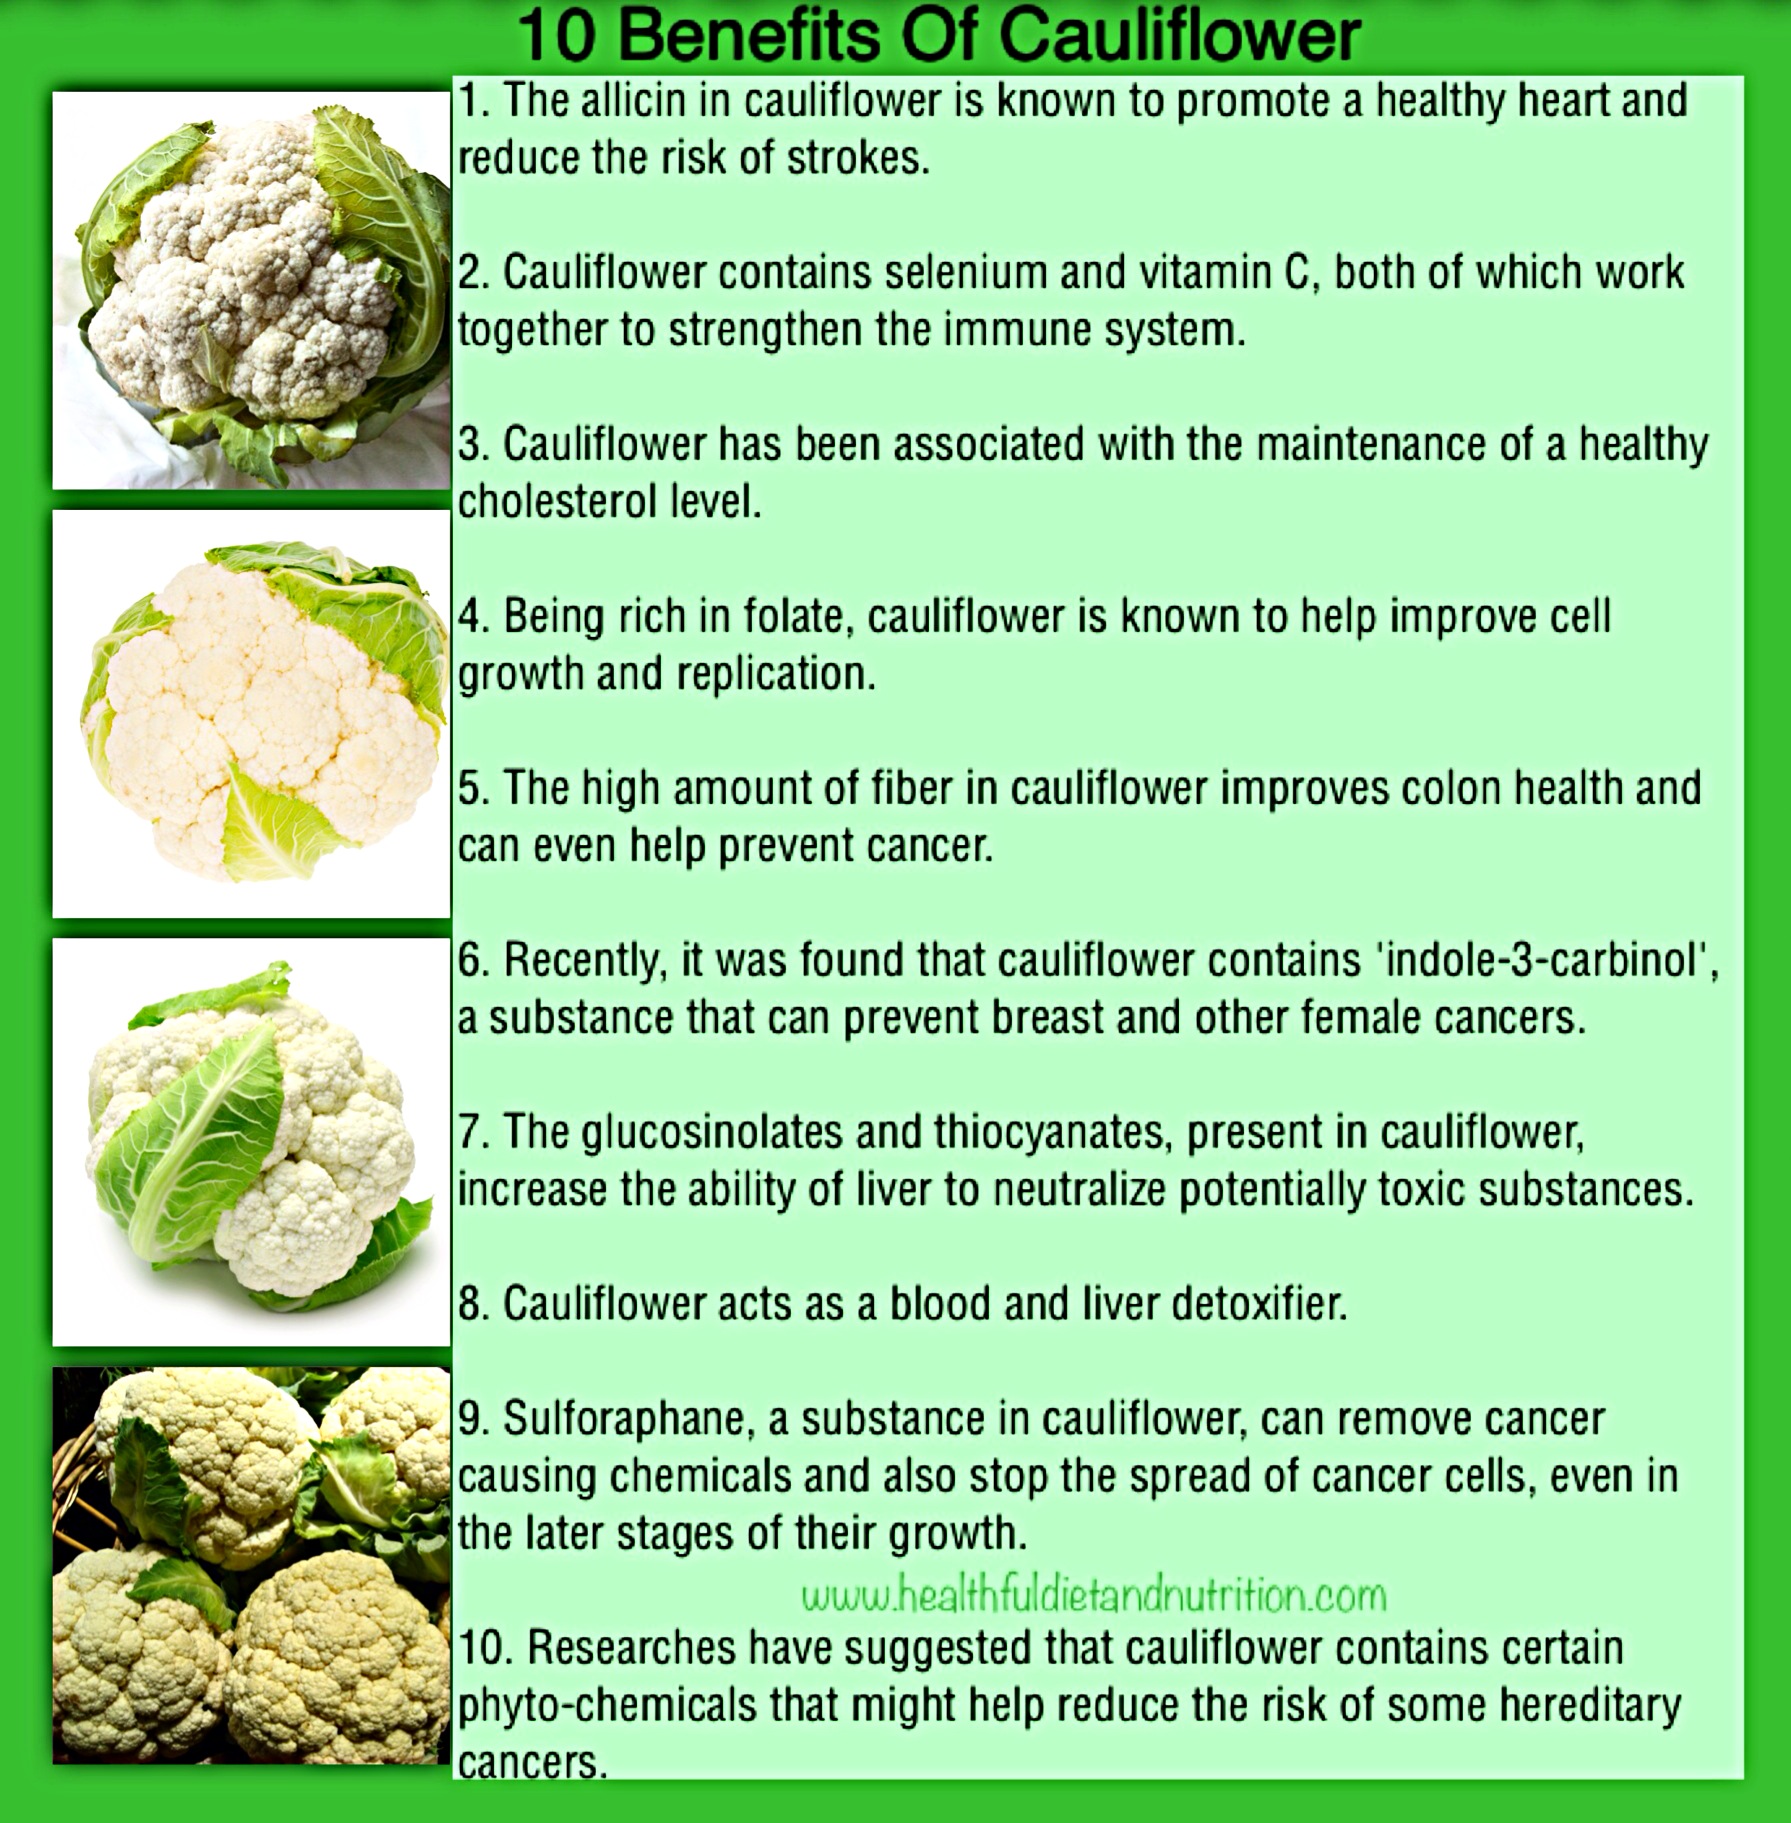 10 Benefits of Cauliflower